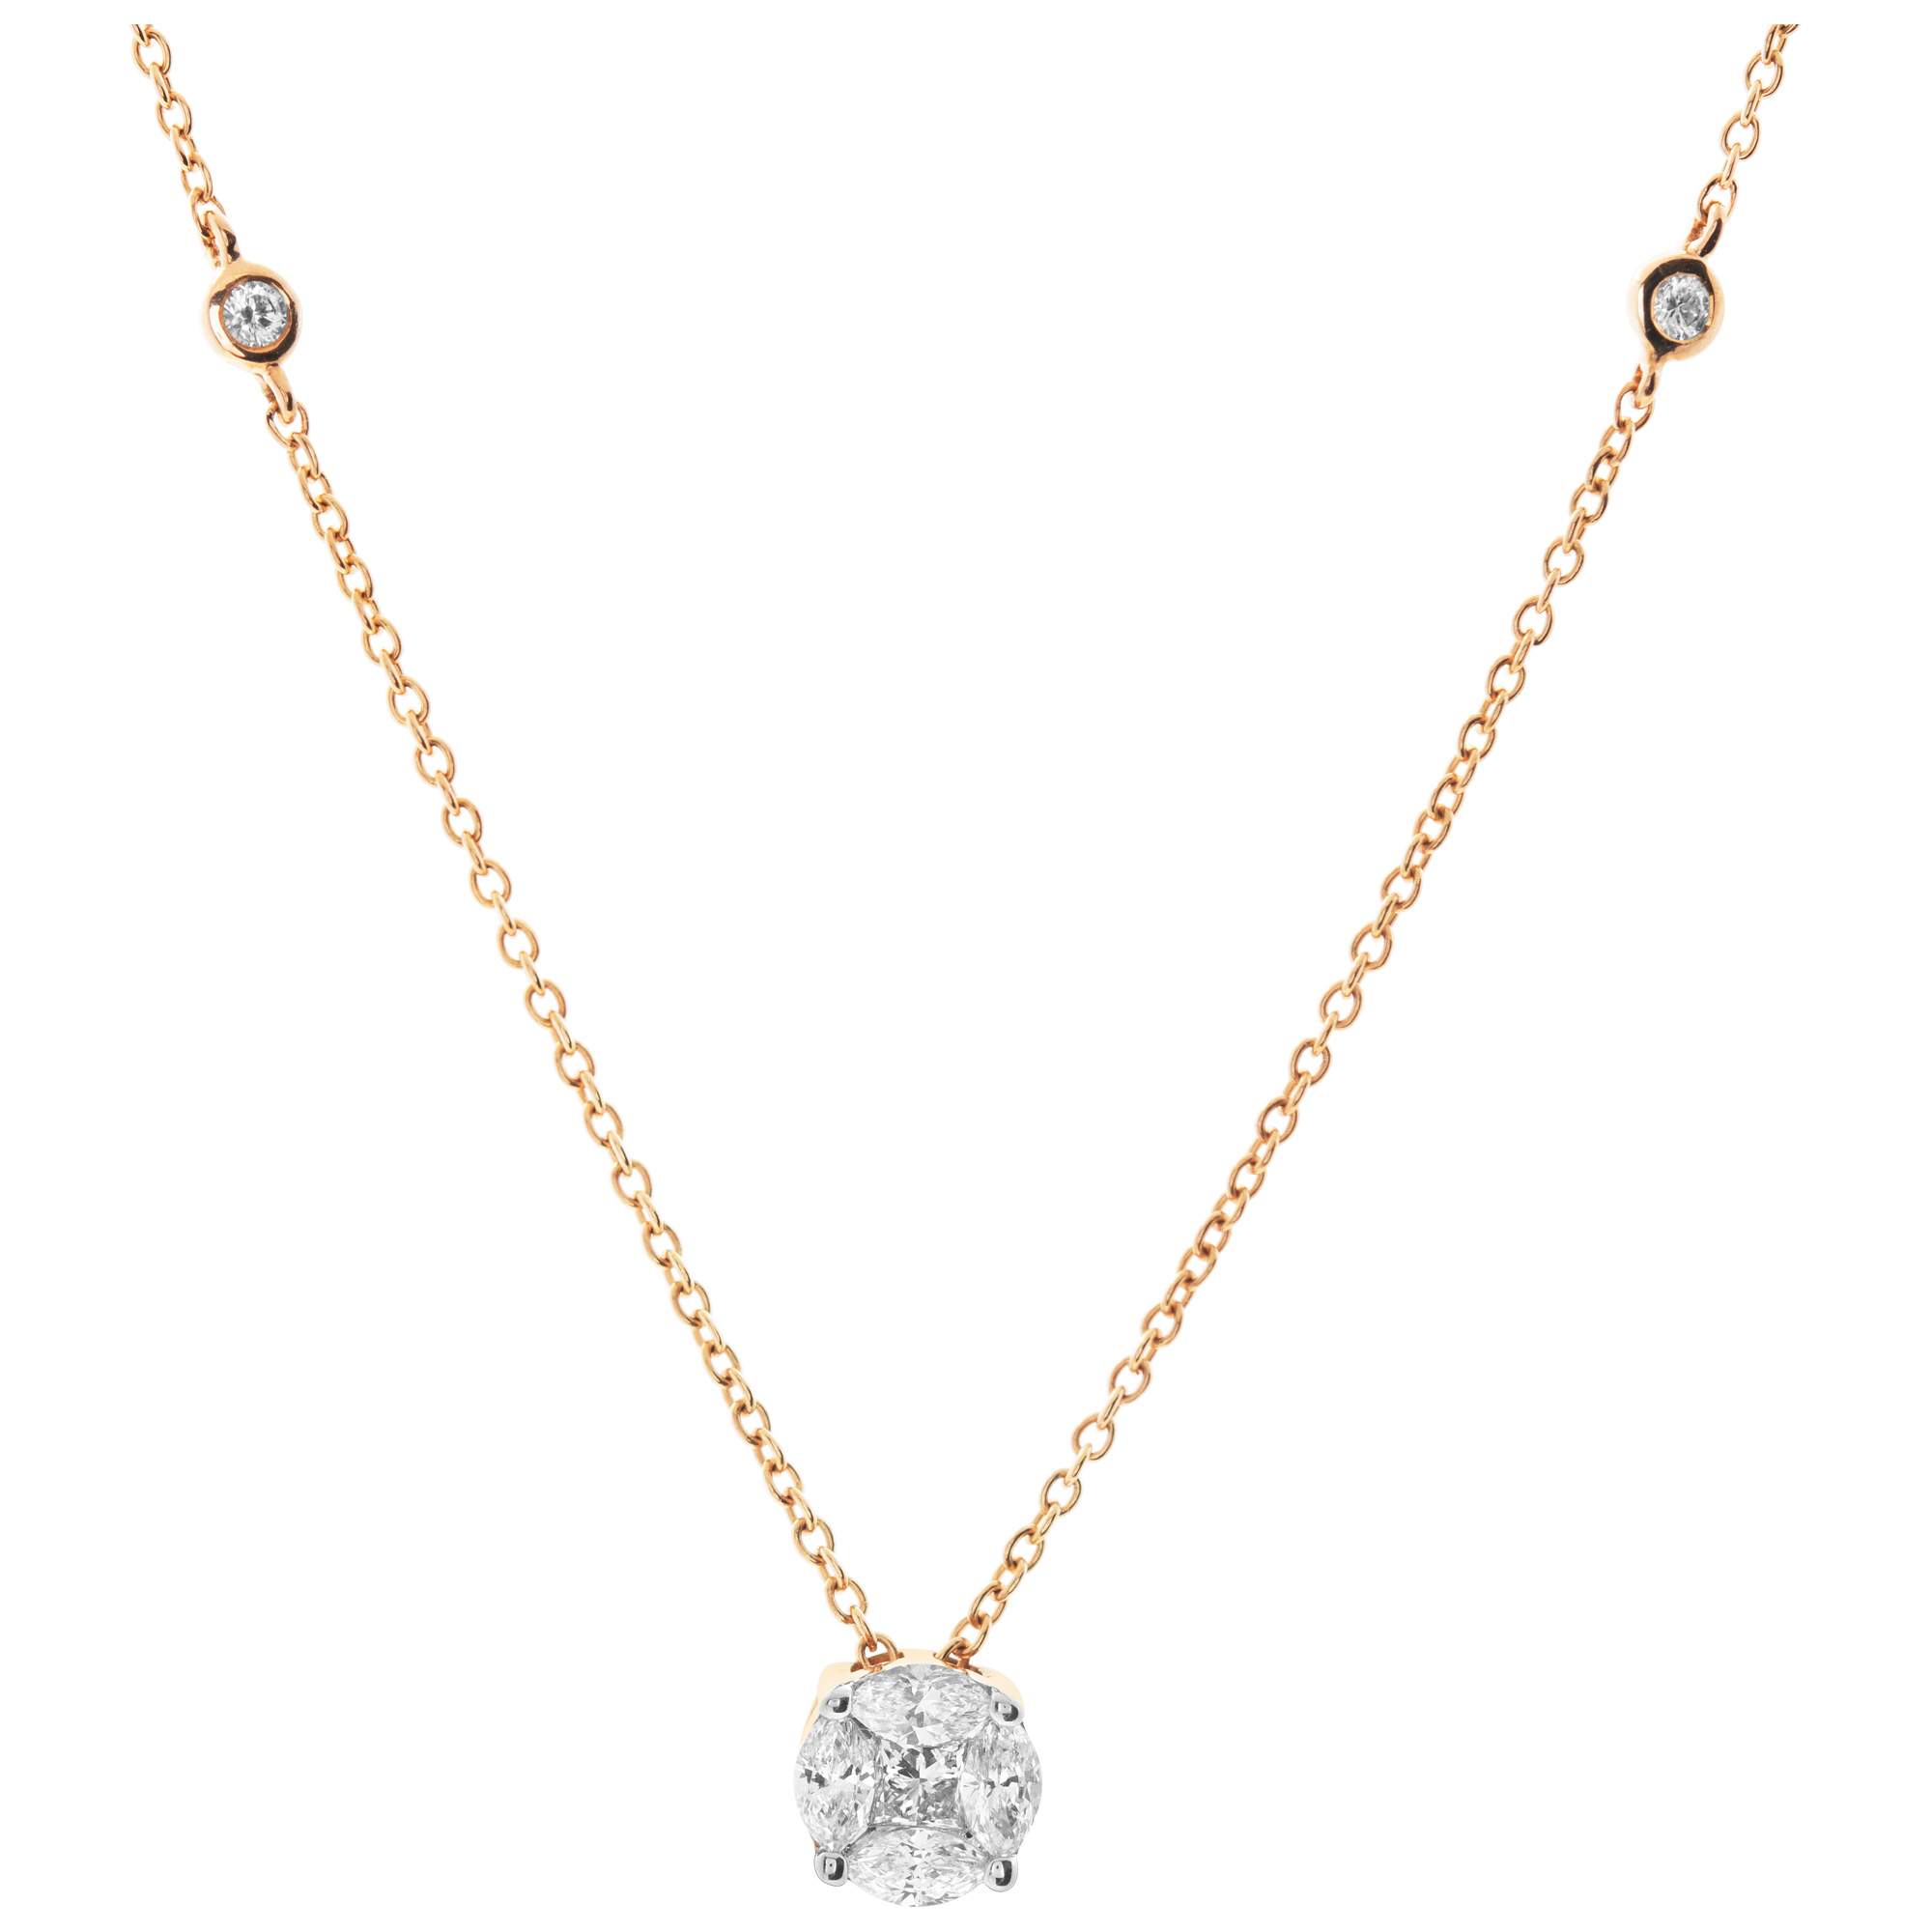 Illusion set round diamond pendant in 18k rose gold with 0.54 carat total diamond